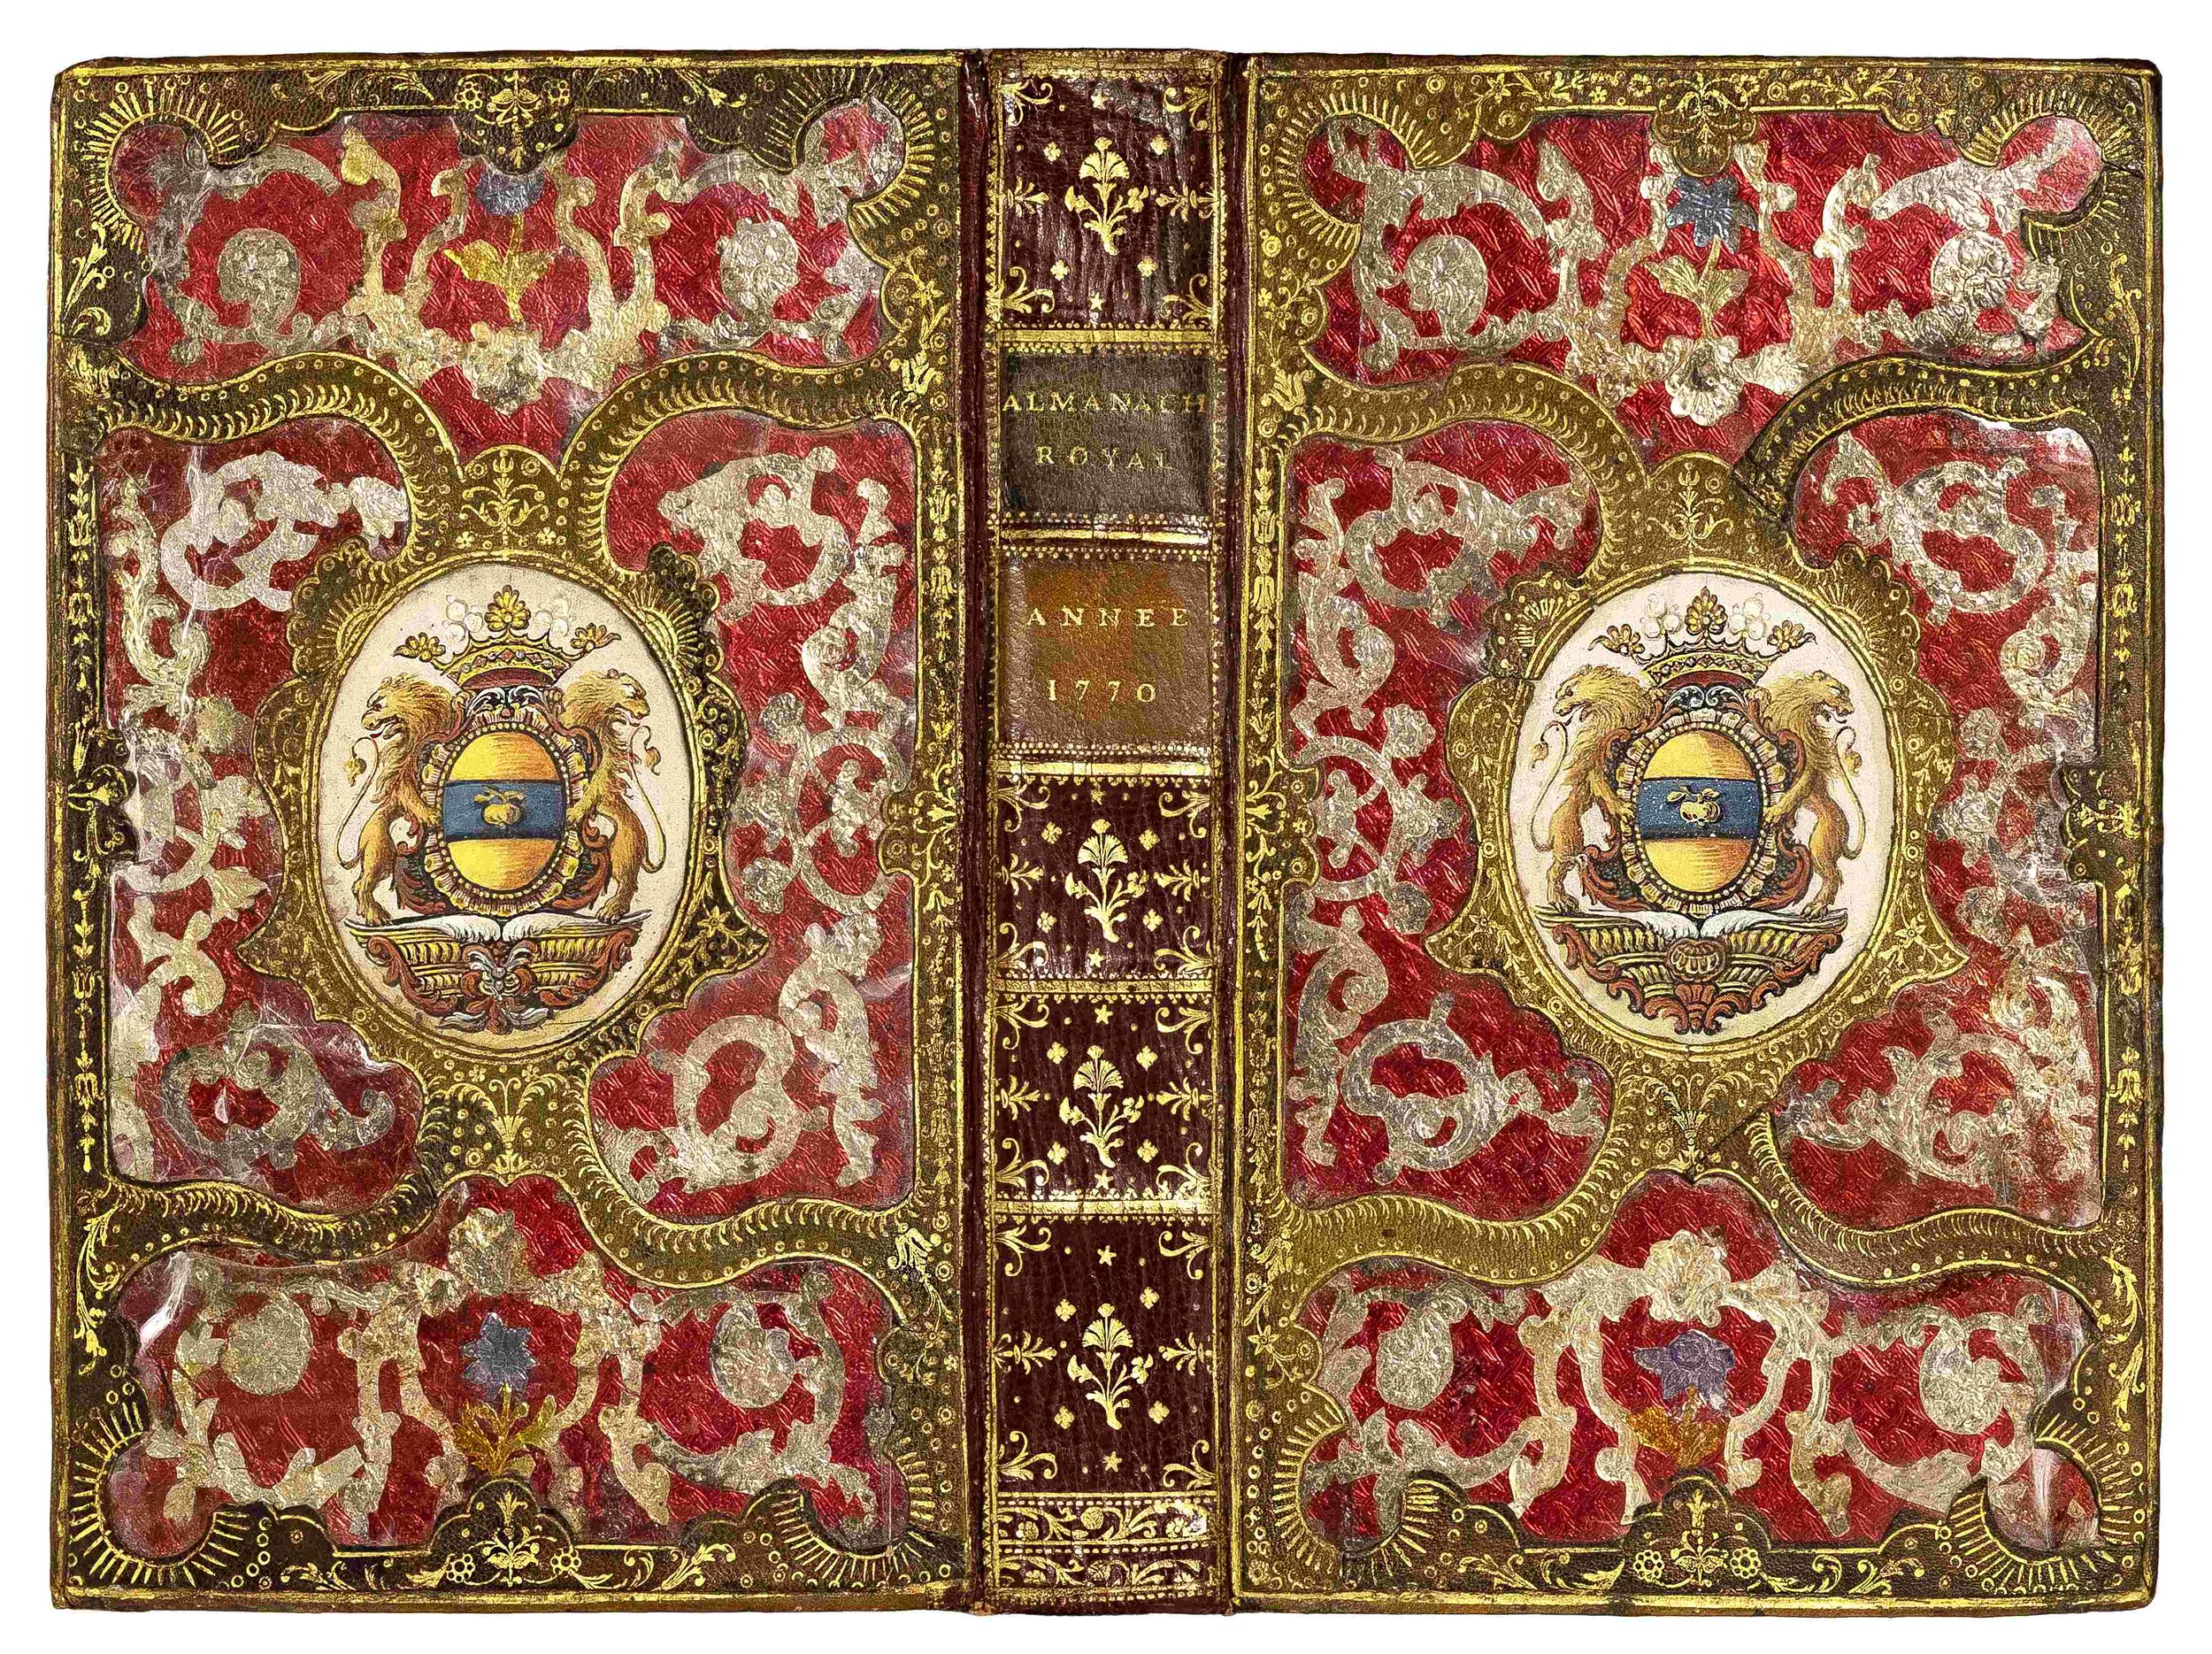 103-derome-paris-de-meyzieu-Inlaid-Binding-morocco-mosaic-reliure-maroquin-18th-century.jpg